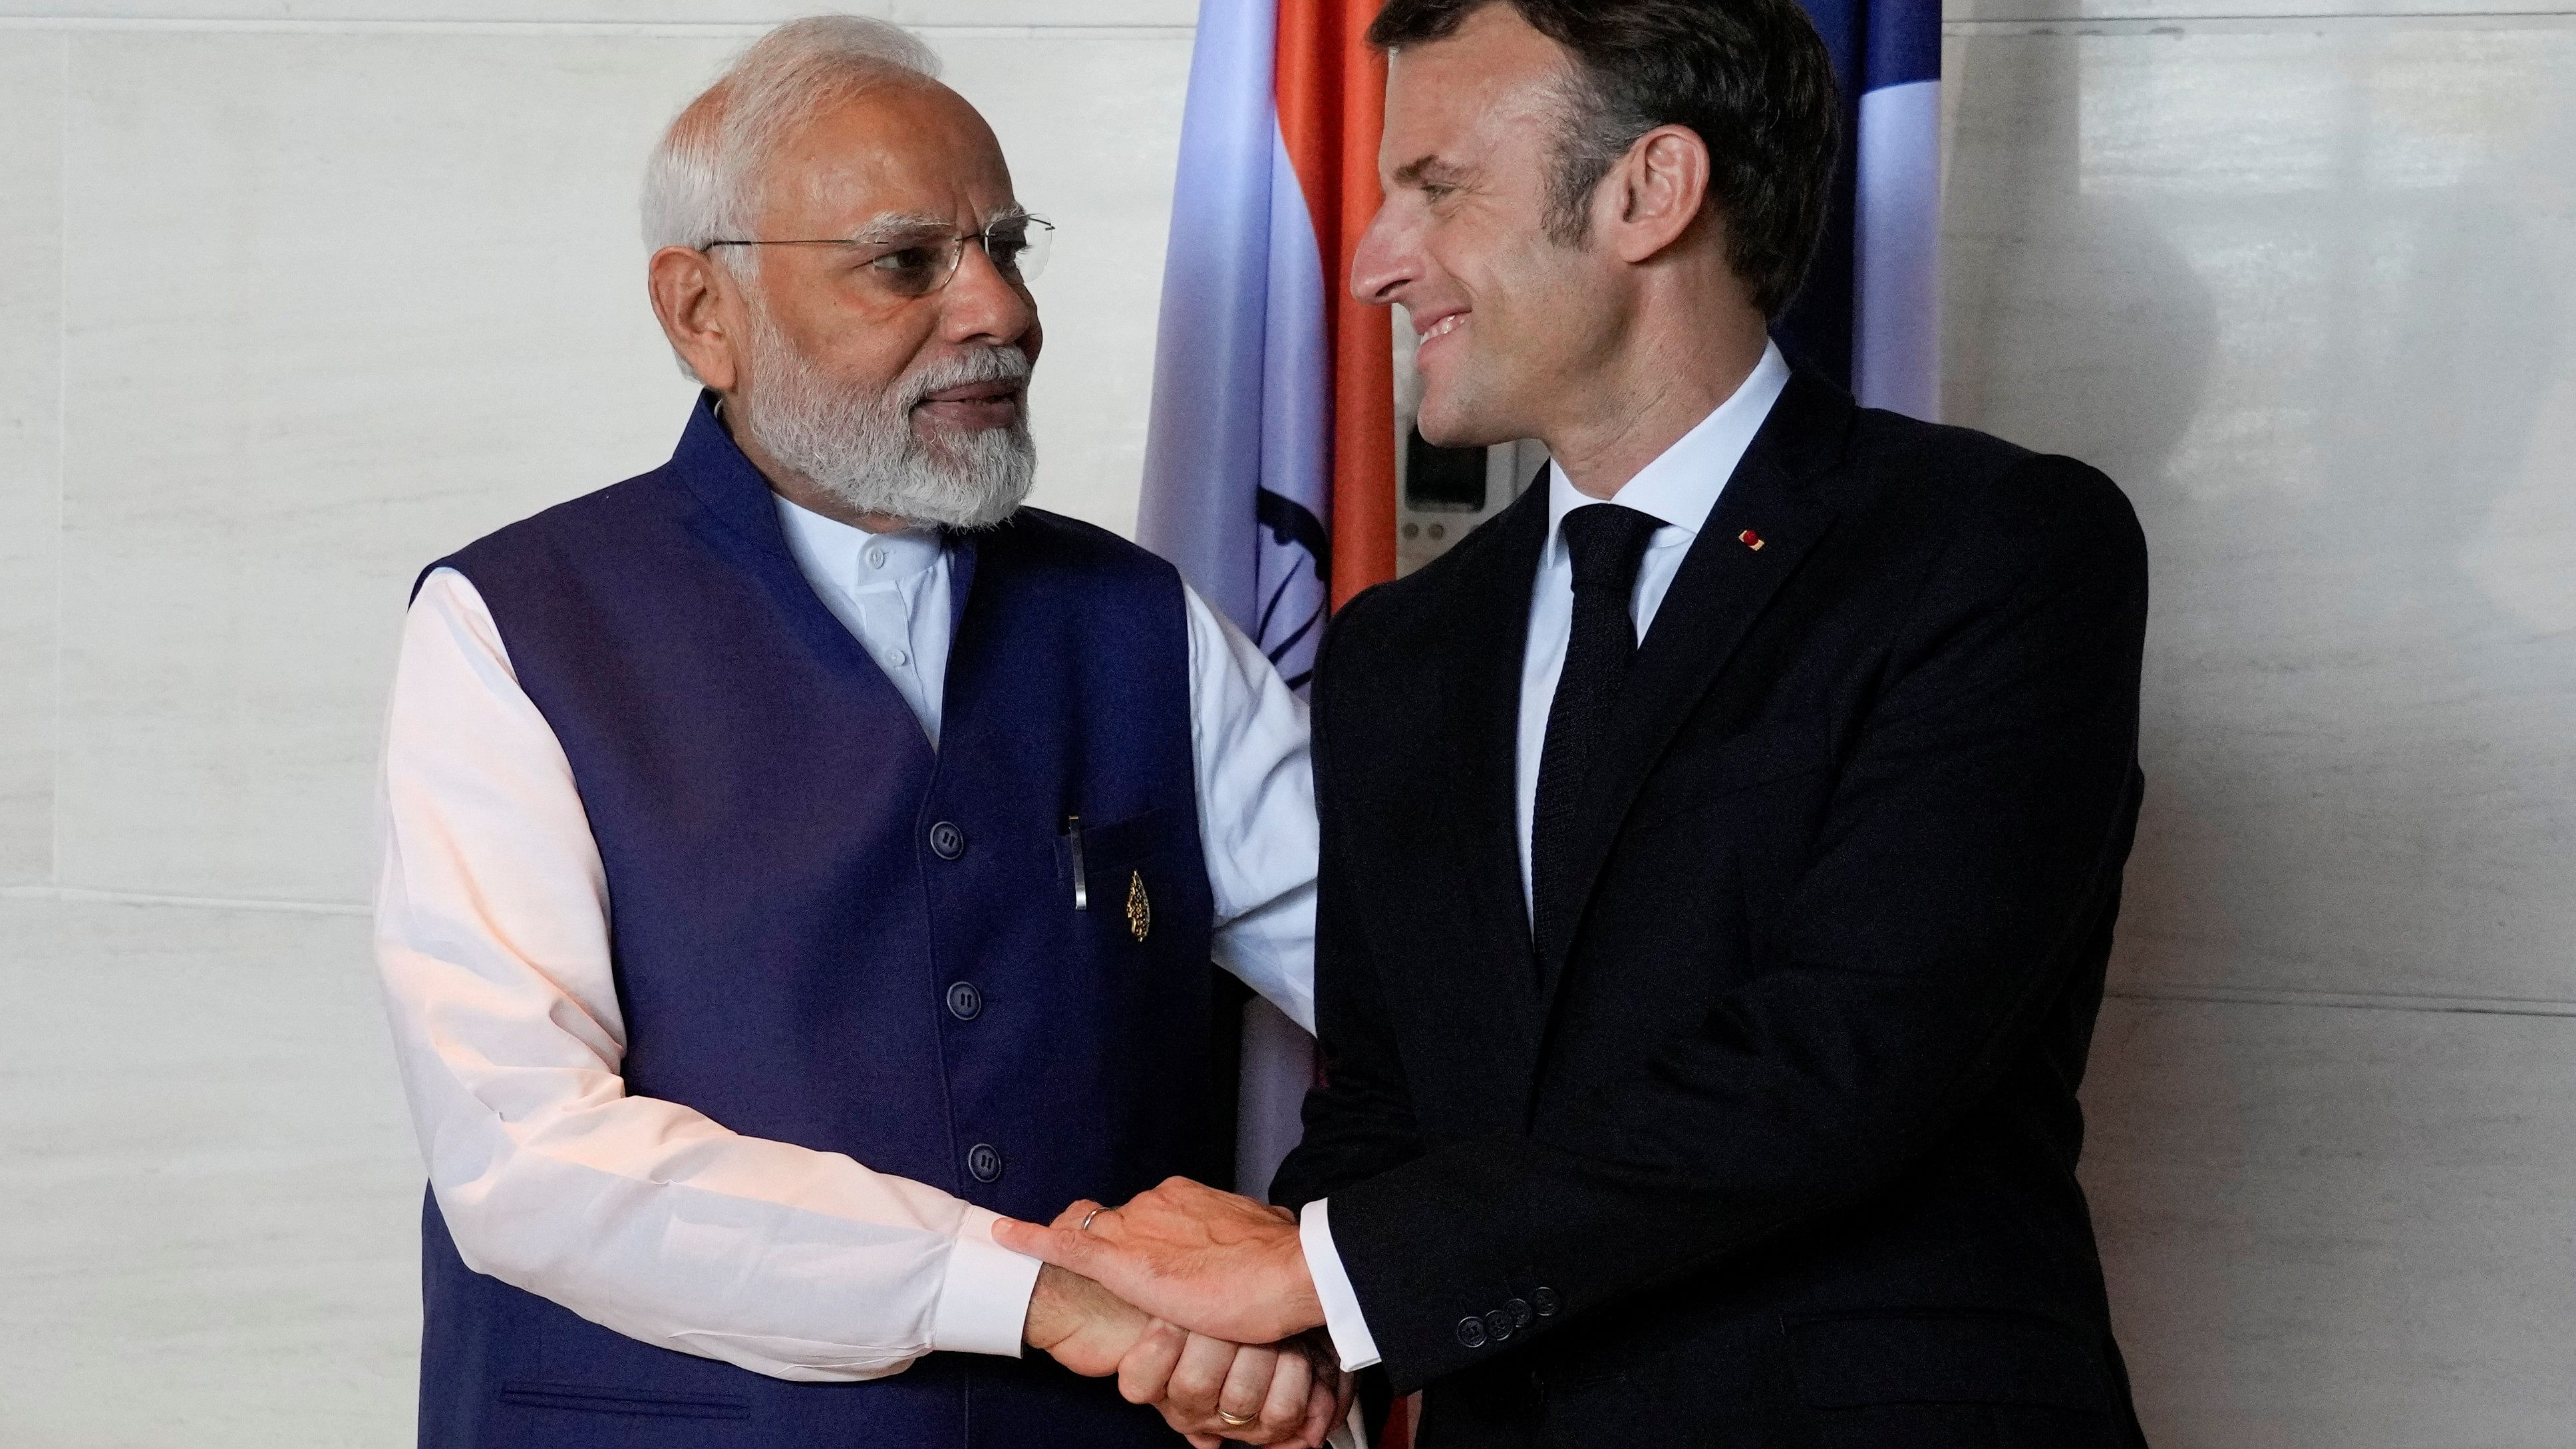 <div class="paragraphs"><p>Prime Minister Narendra Modi and French President Emmanuel Macron.&nbsp;</p></div>